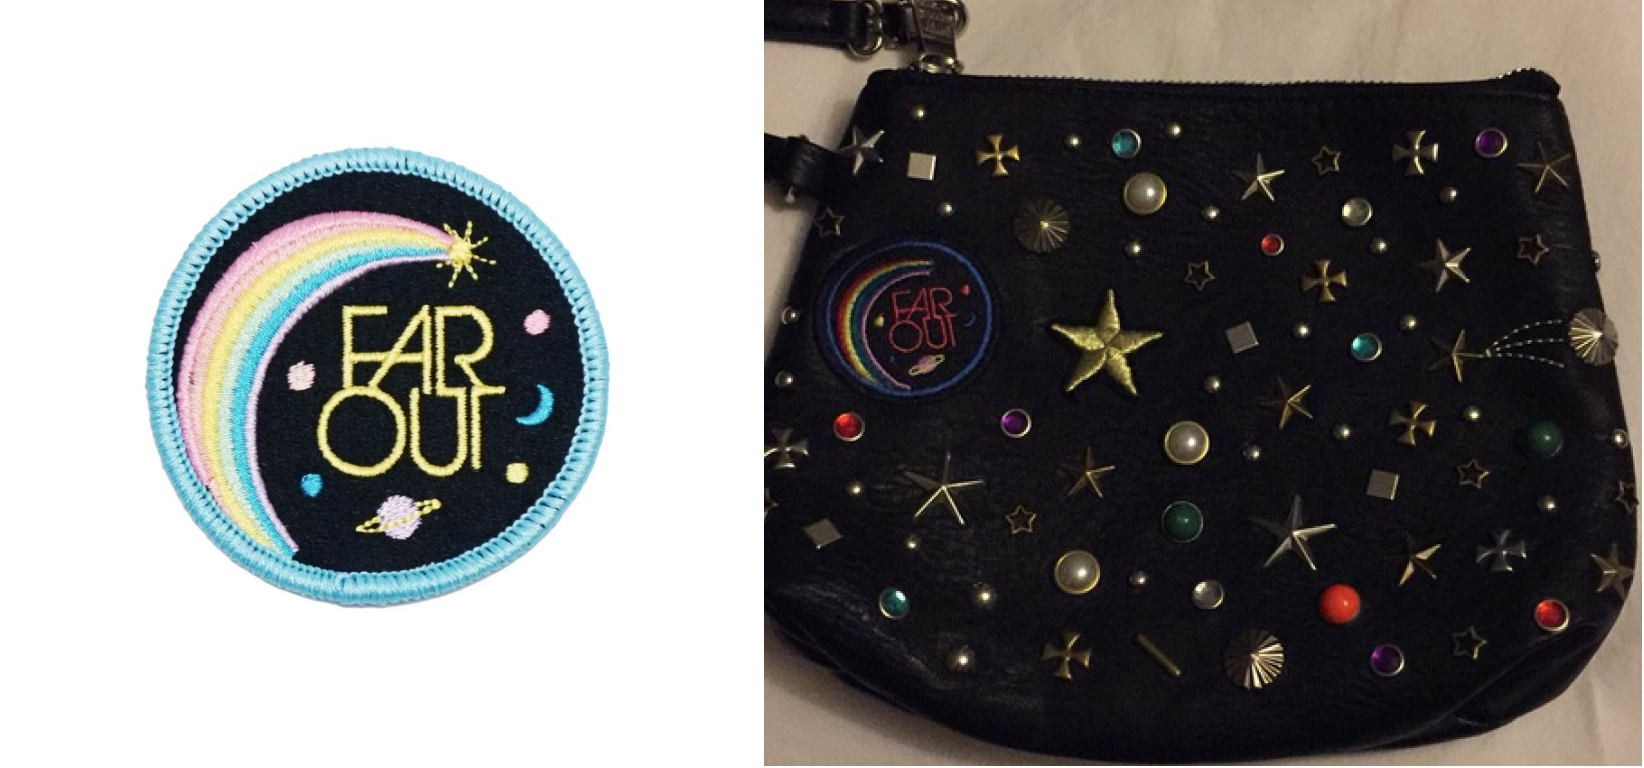  Lucky Horse’s patch (left) & Steve Madden’s bag (right) 